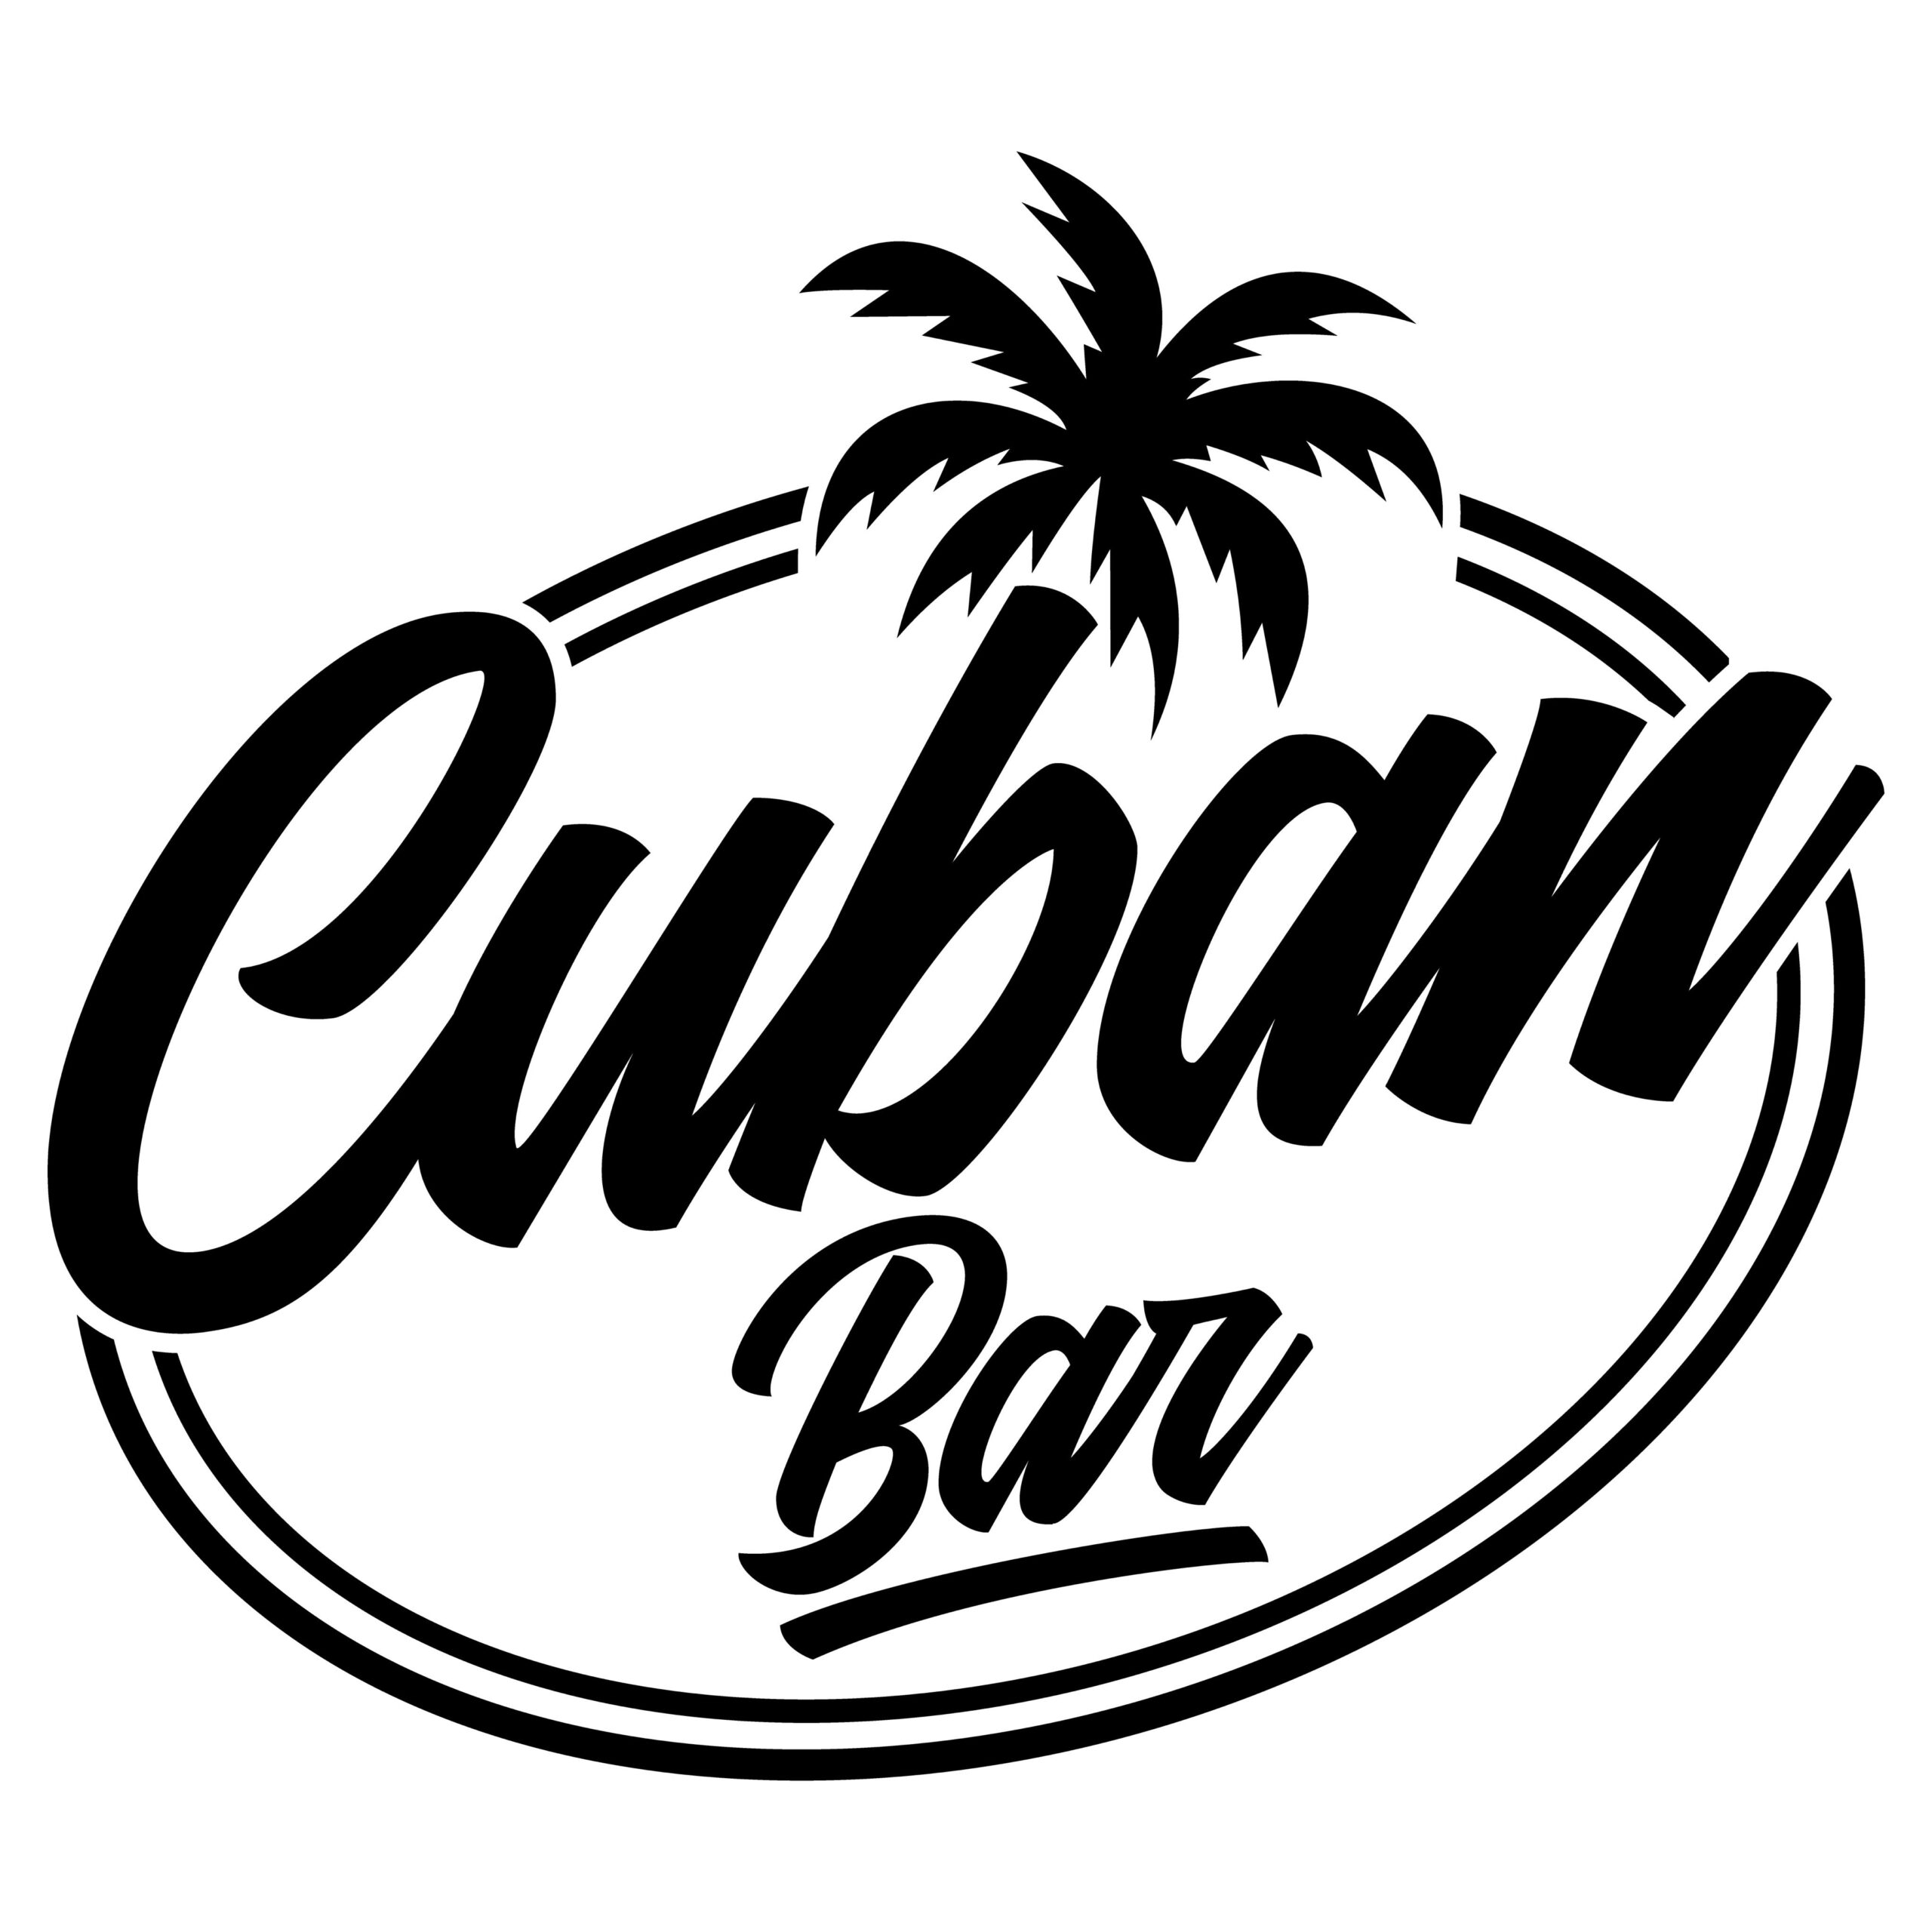 Cuban Bar - The Best Cocktail Bar in Blackpool